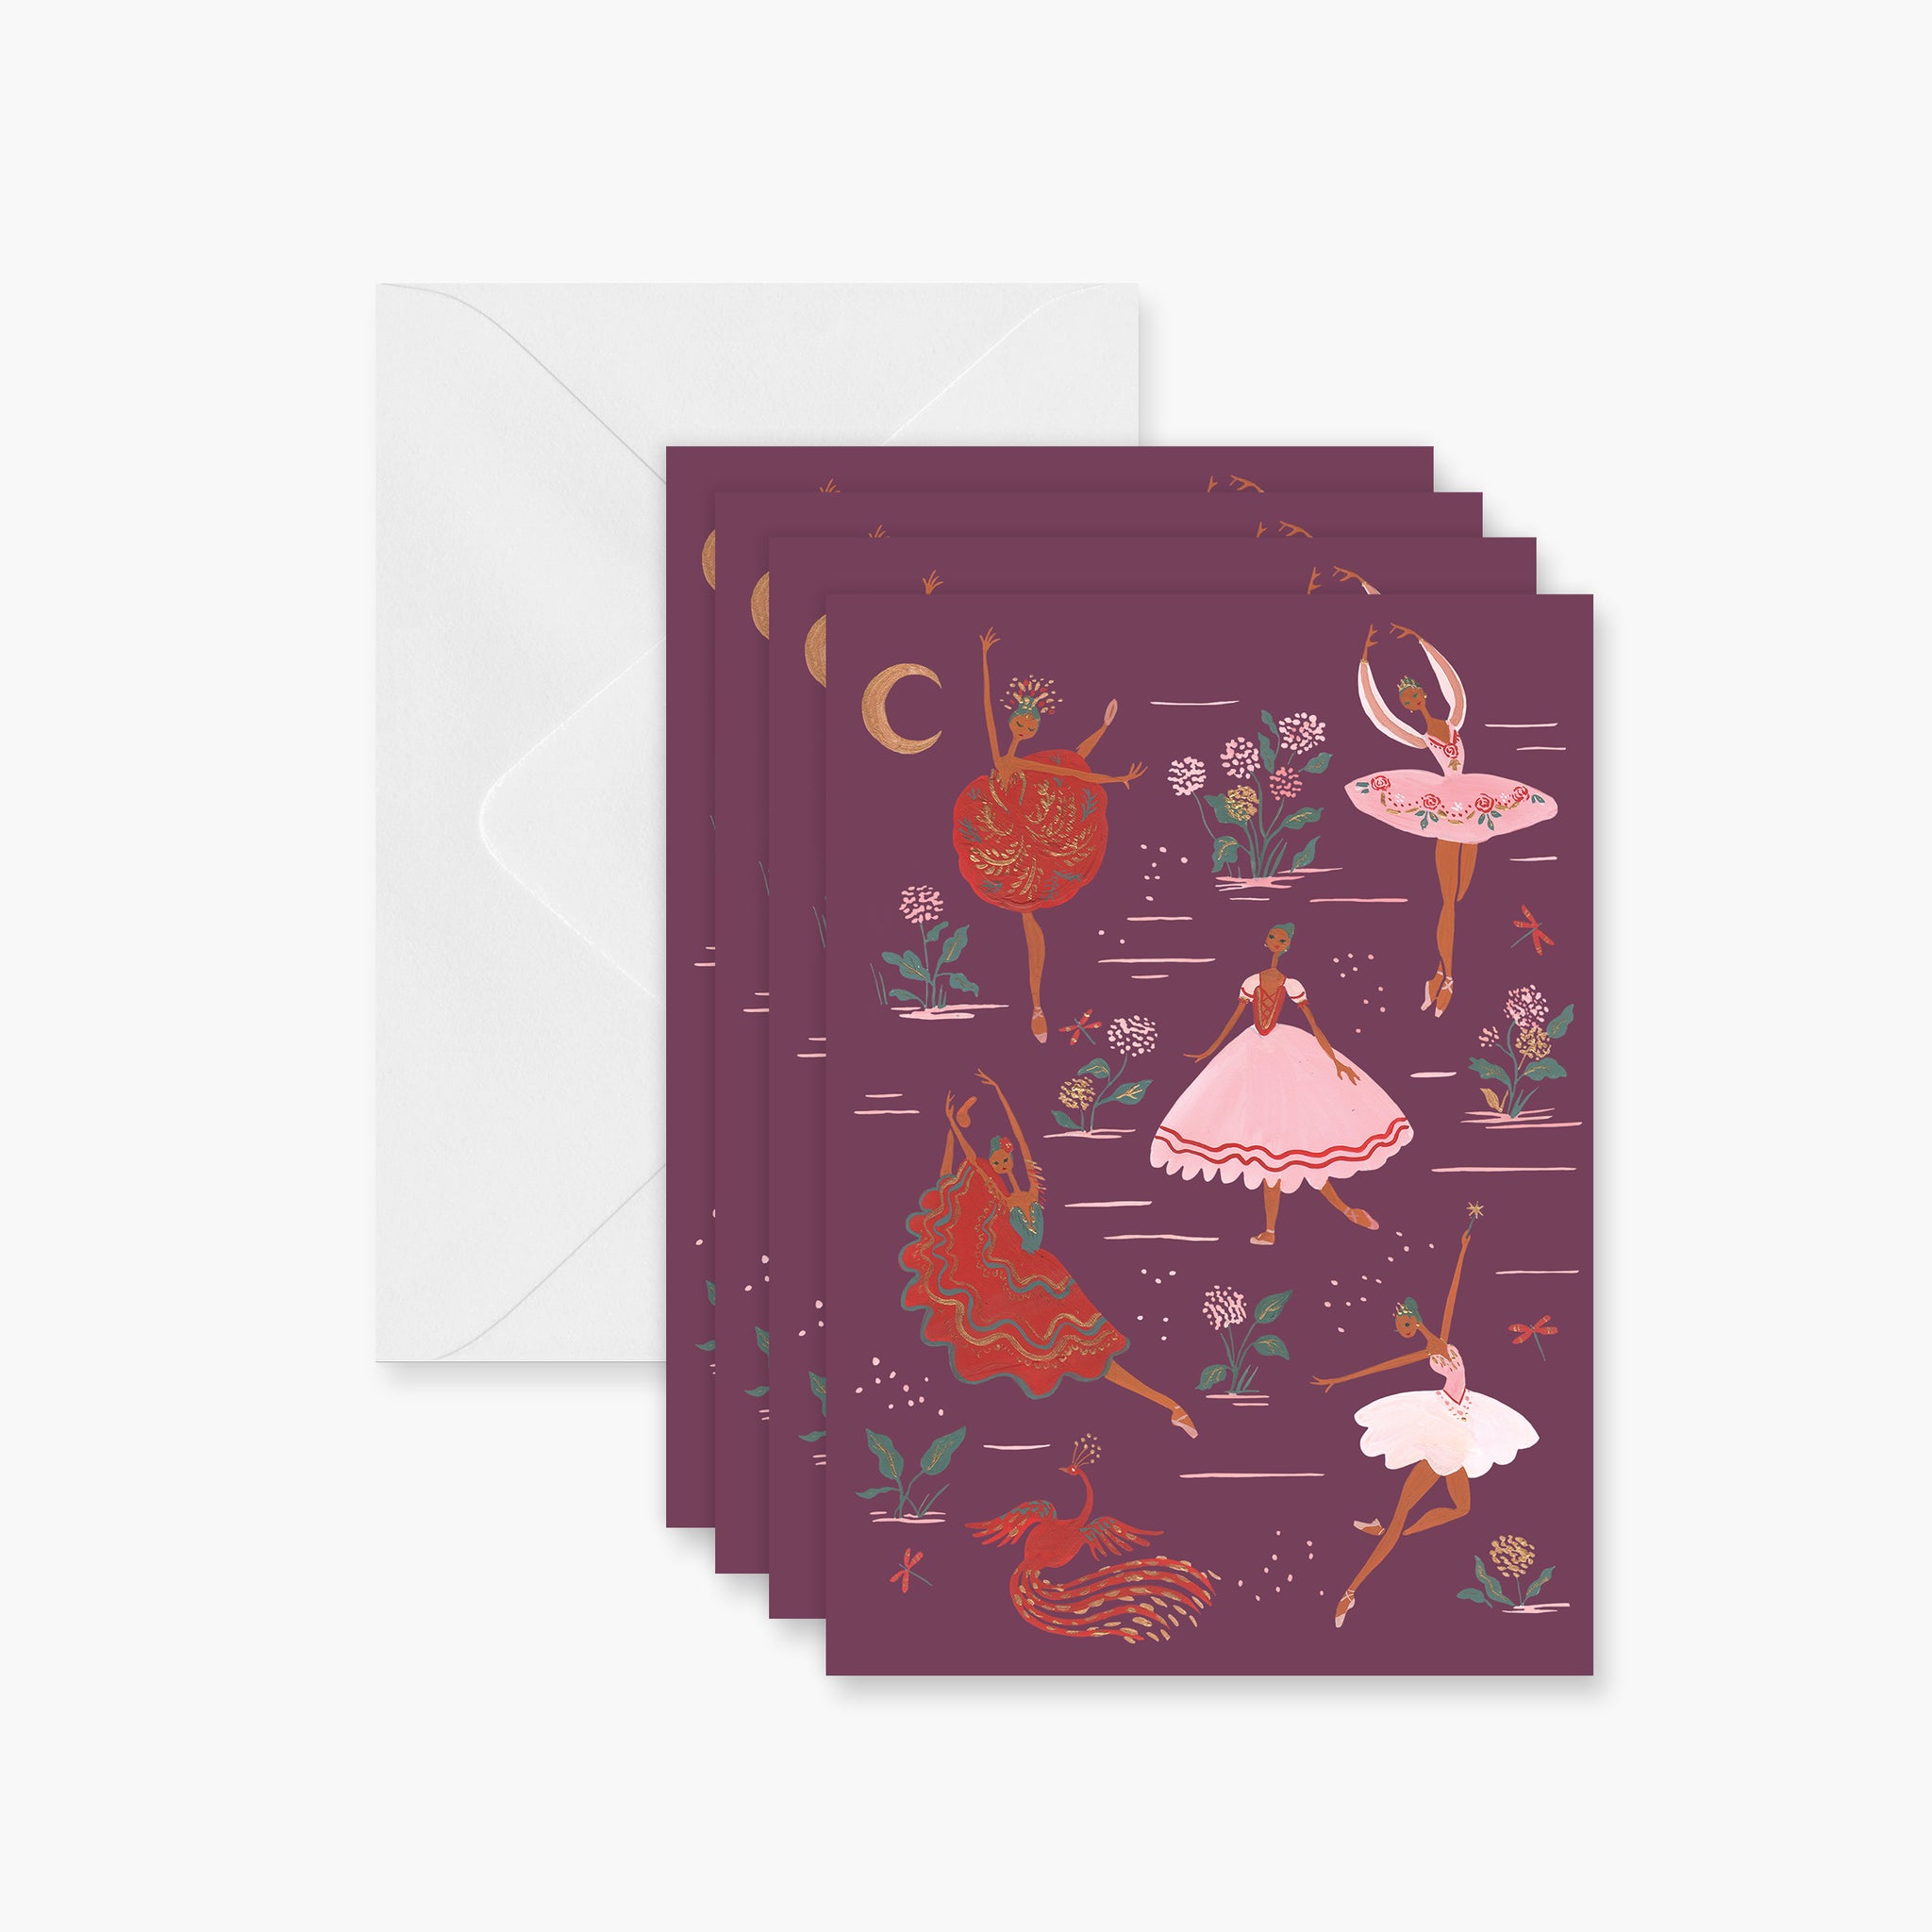 The Ladies of Fairytales Greeting Card Set